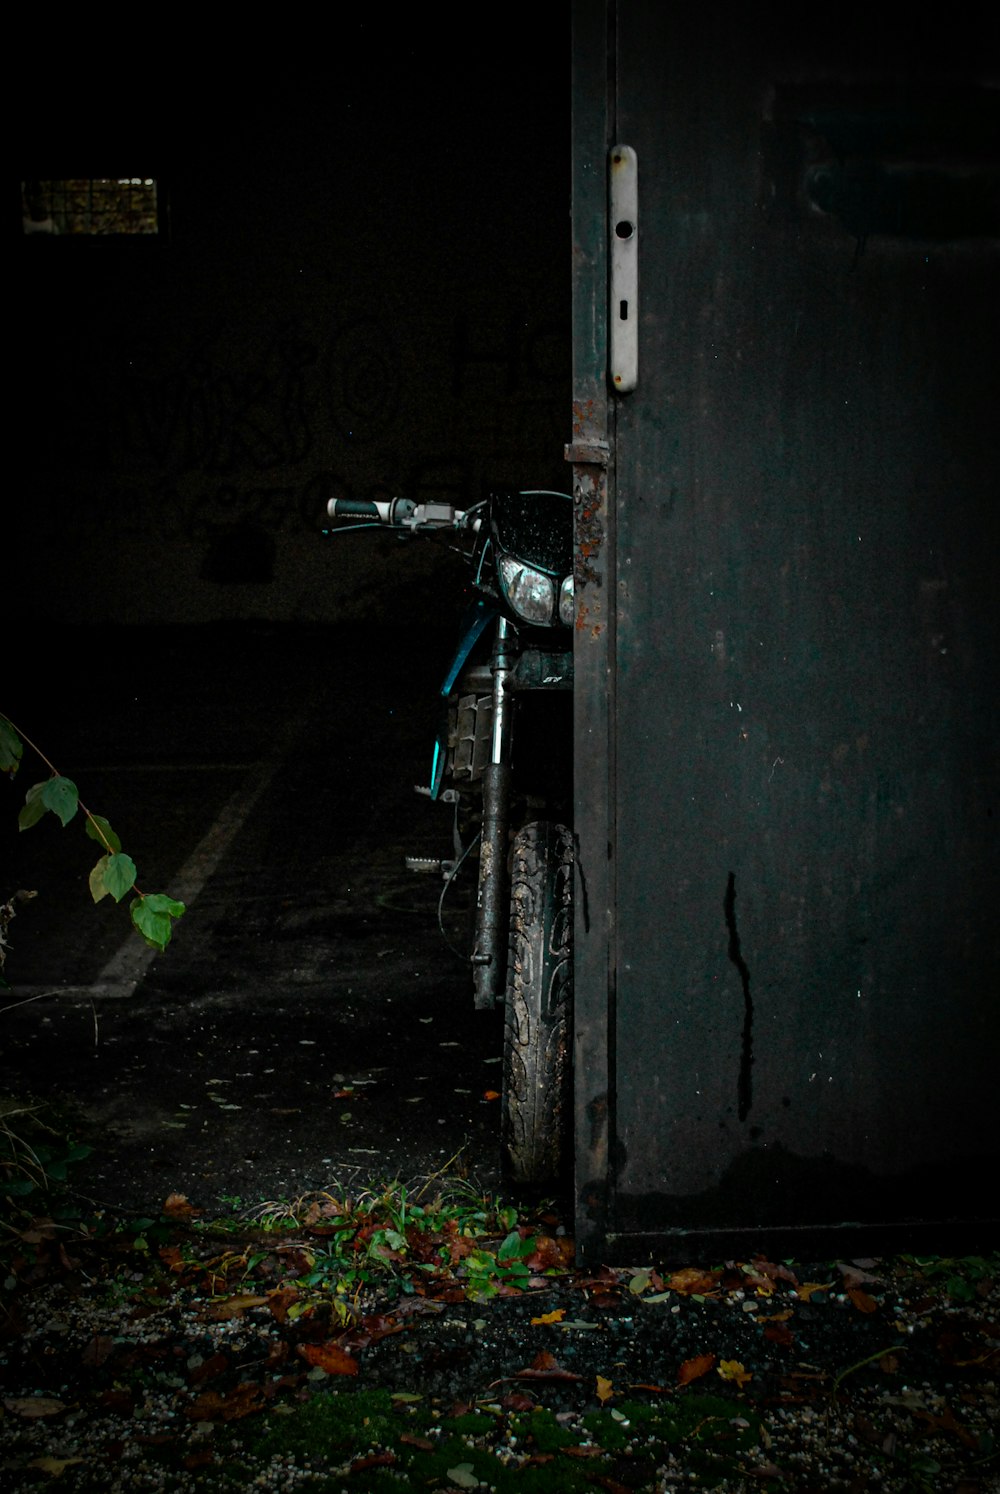 parked bike near door